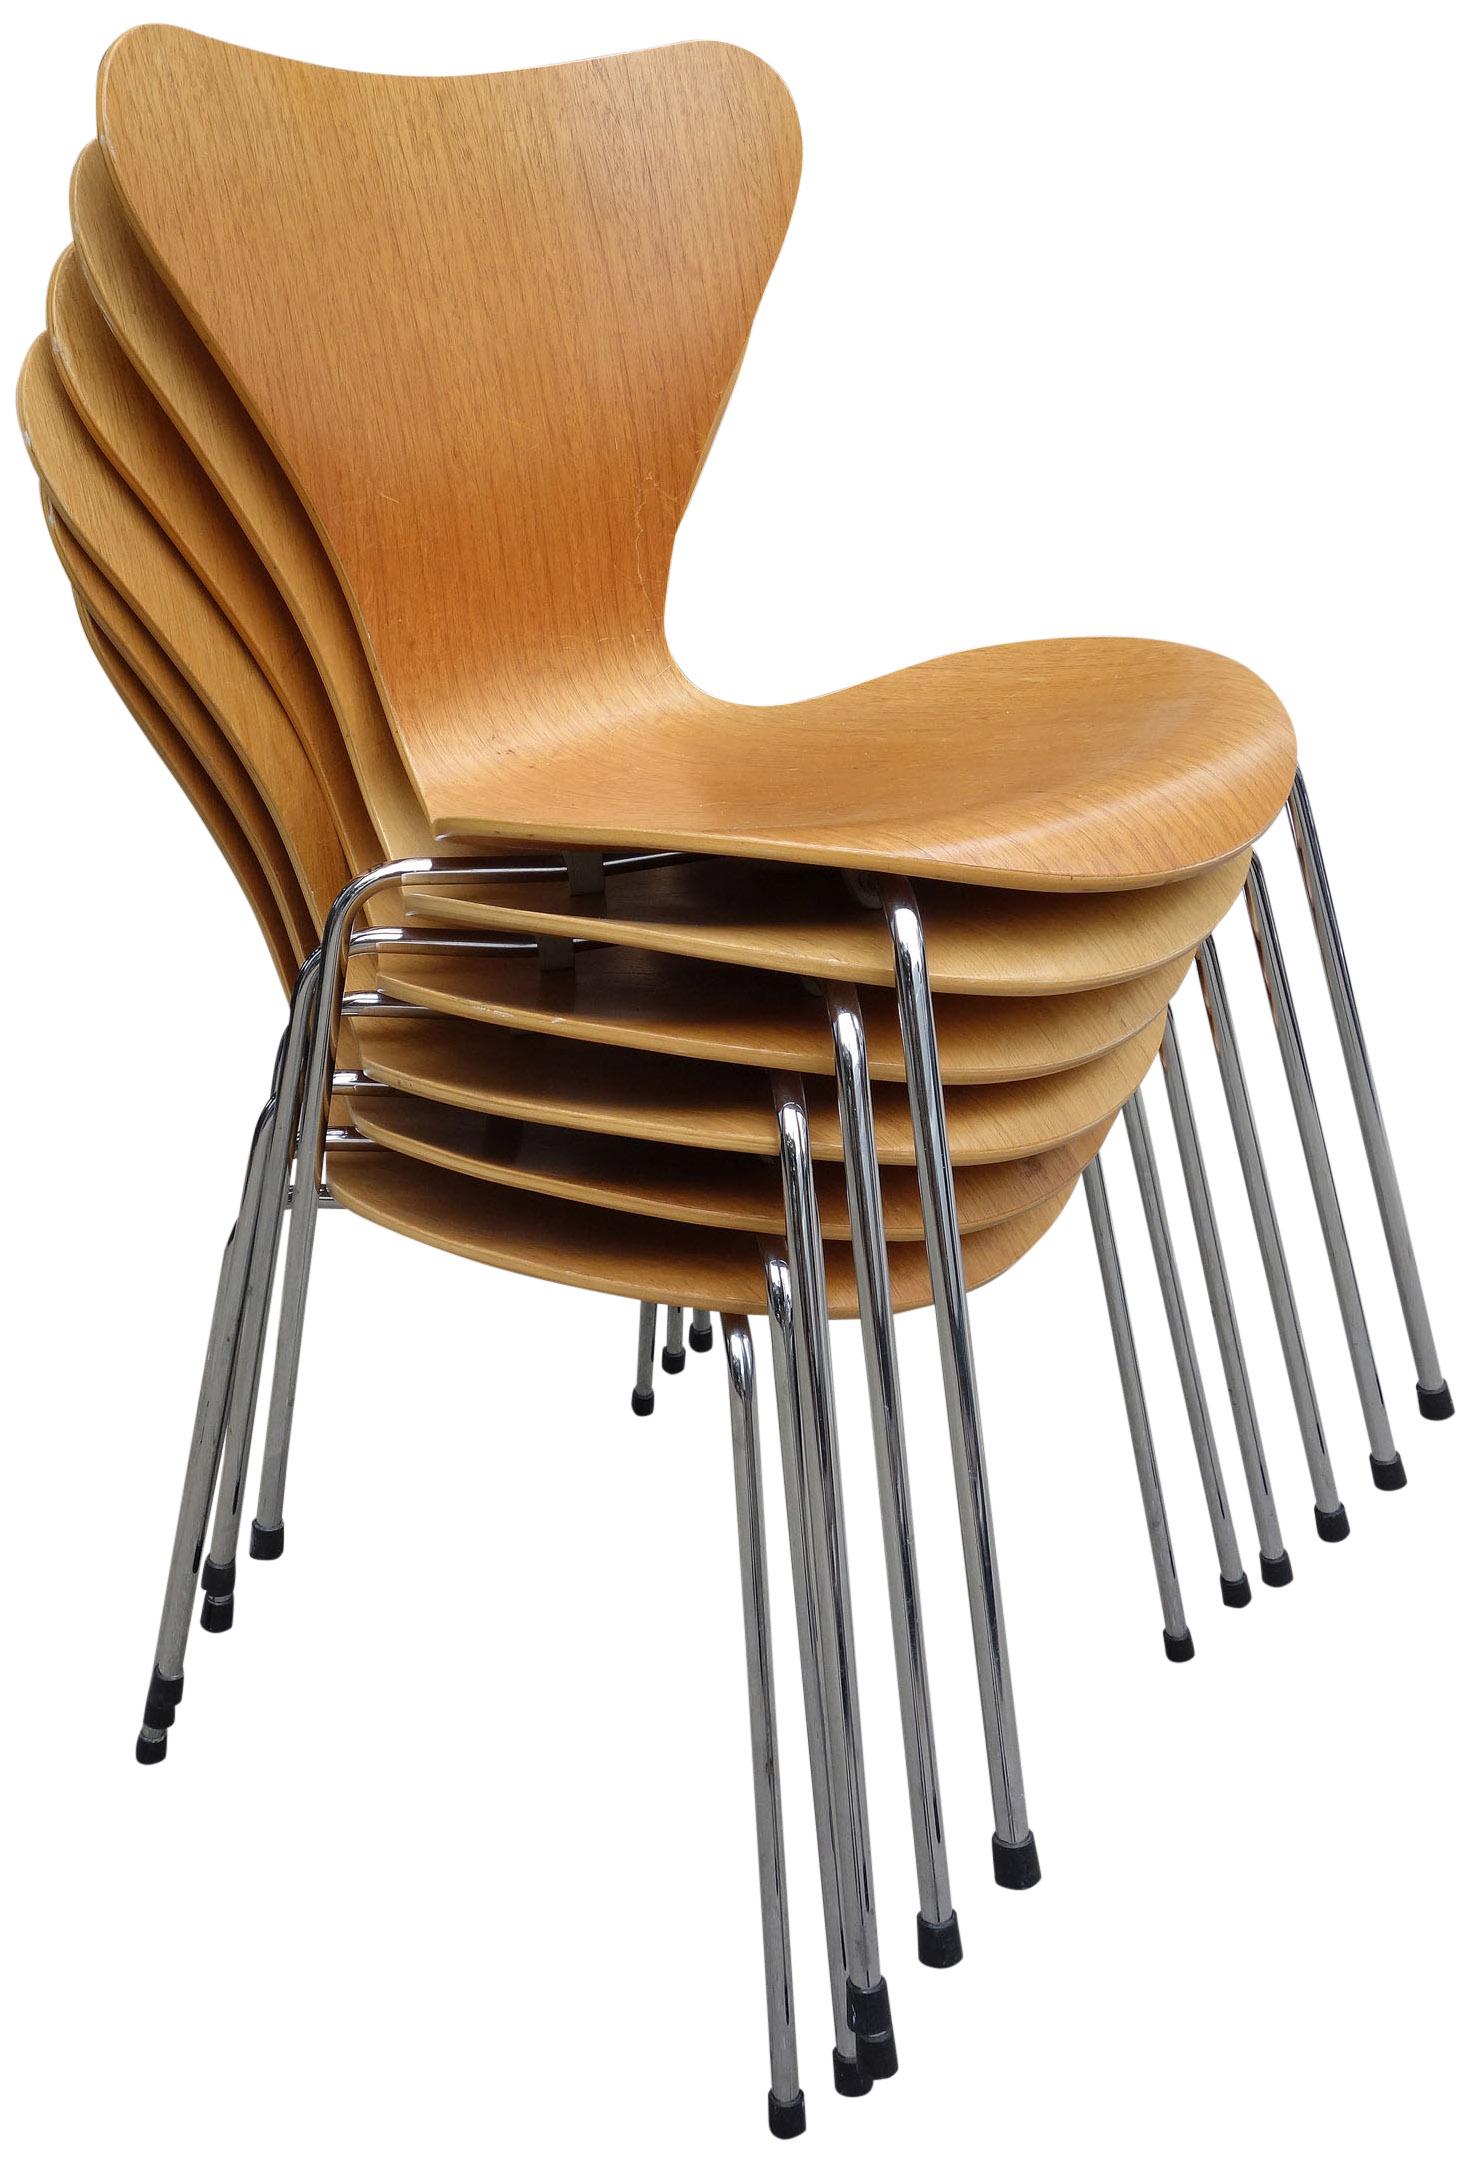 Scandinavian Modern Midcentury Arne Jacobsen Series 7 Chairs